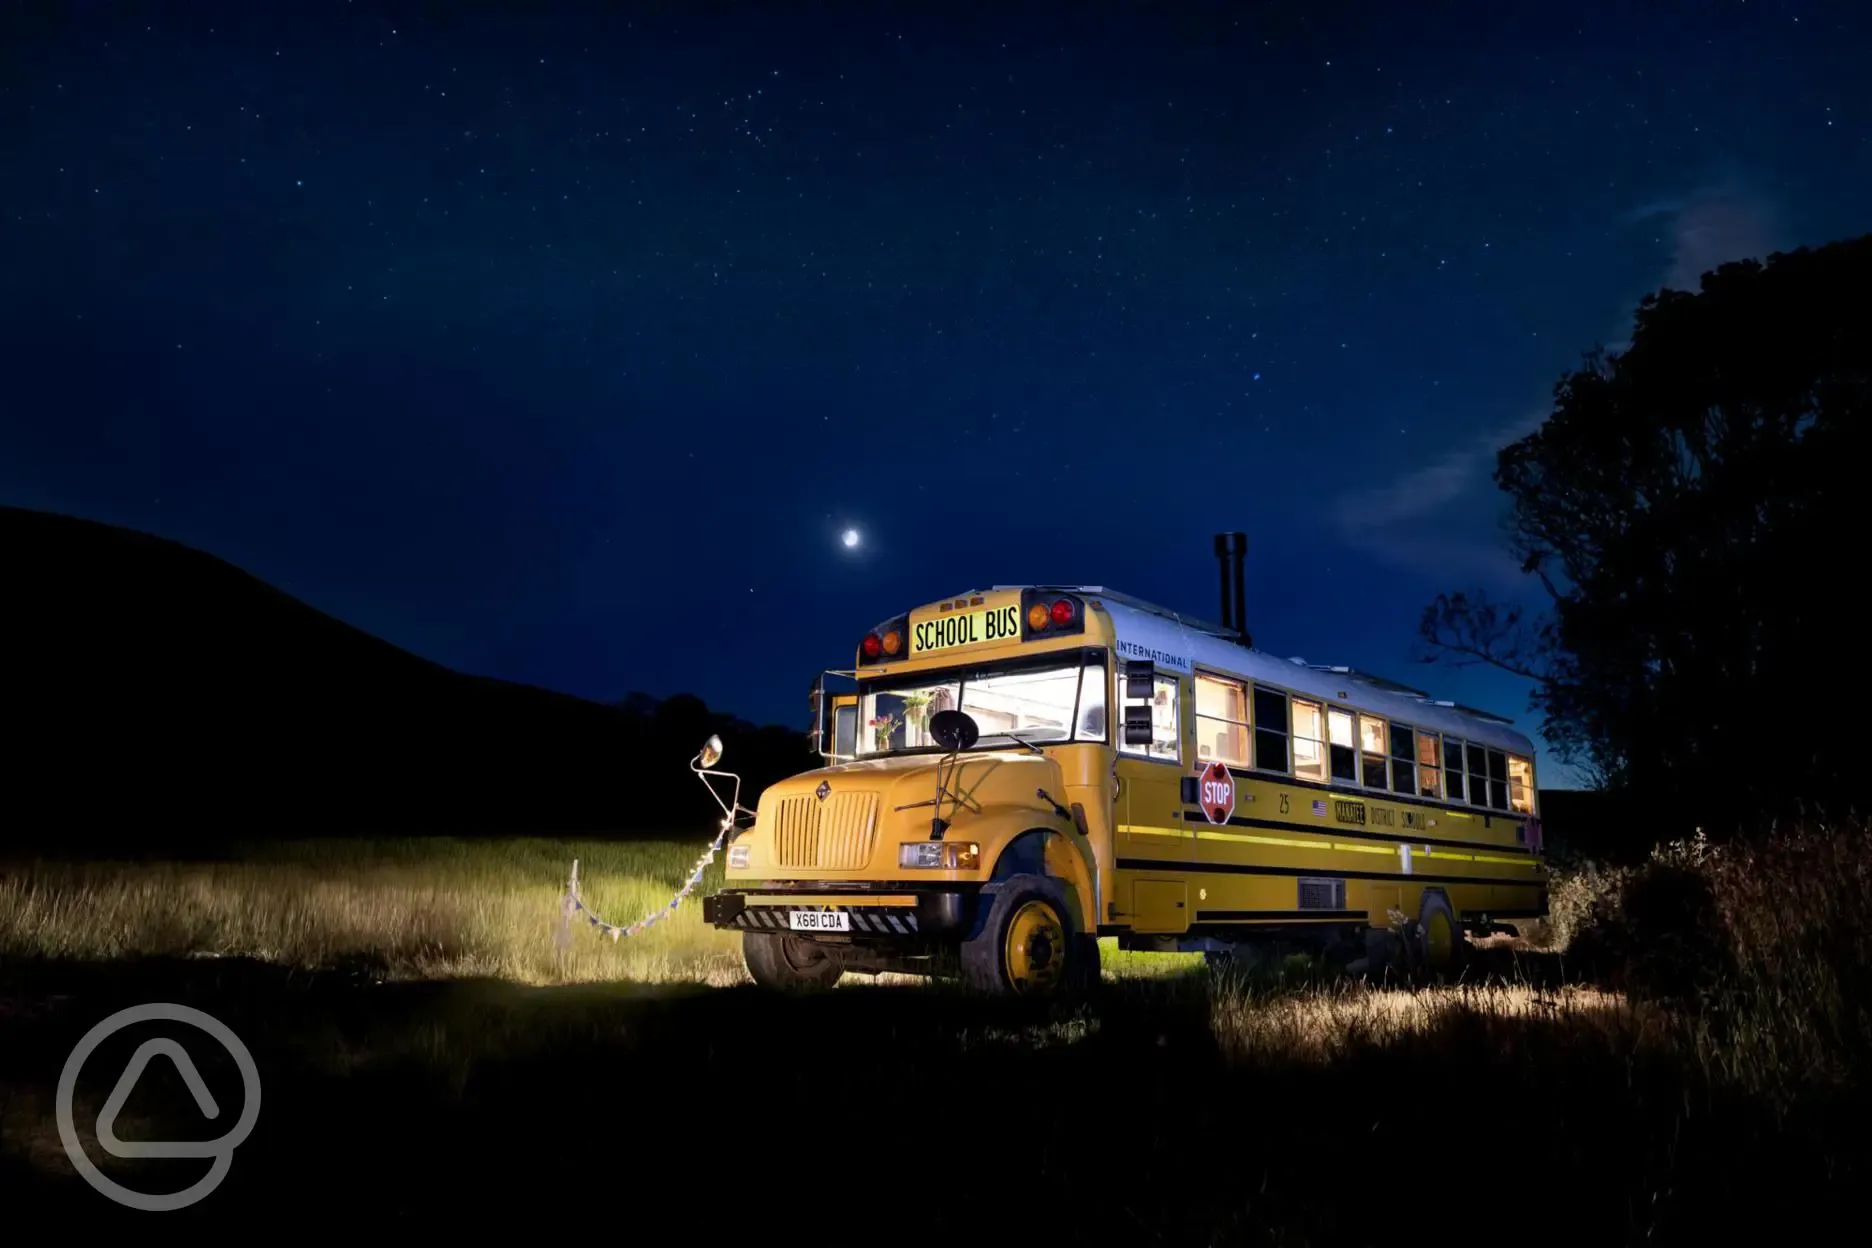 Glamping school bus at night